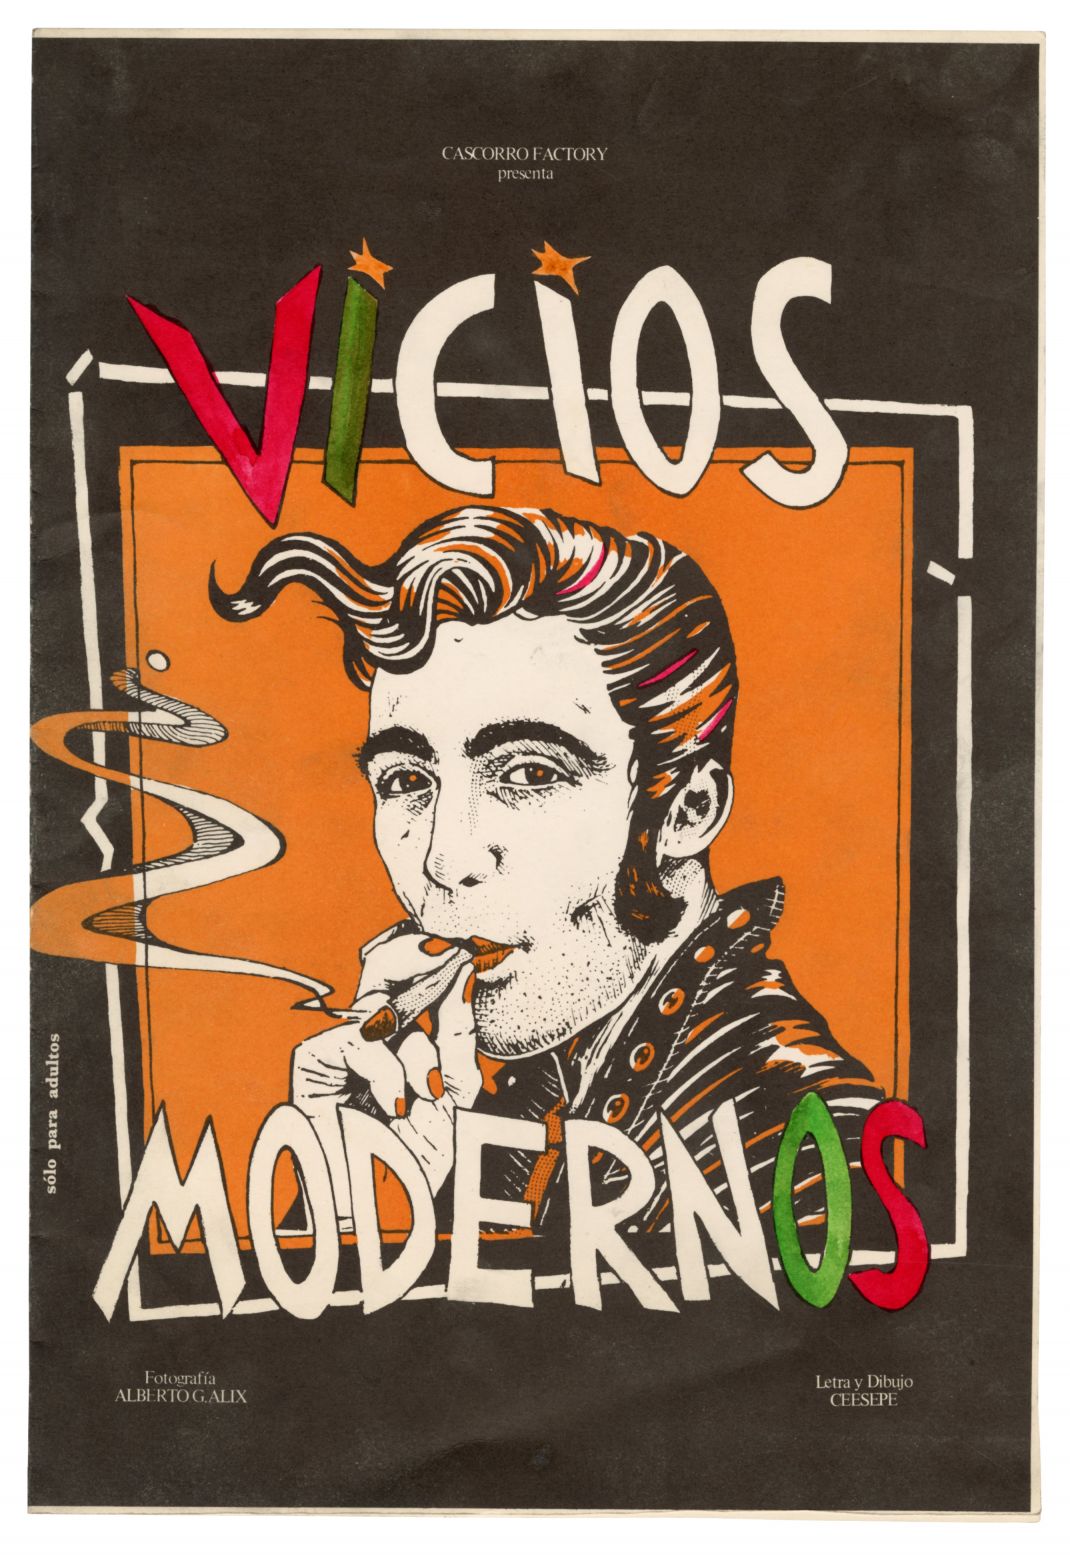 Vicios modernos (1979) - Carlos Sánchez Pérez - Ceesepe